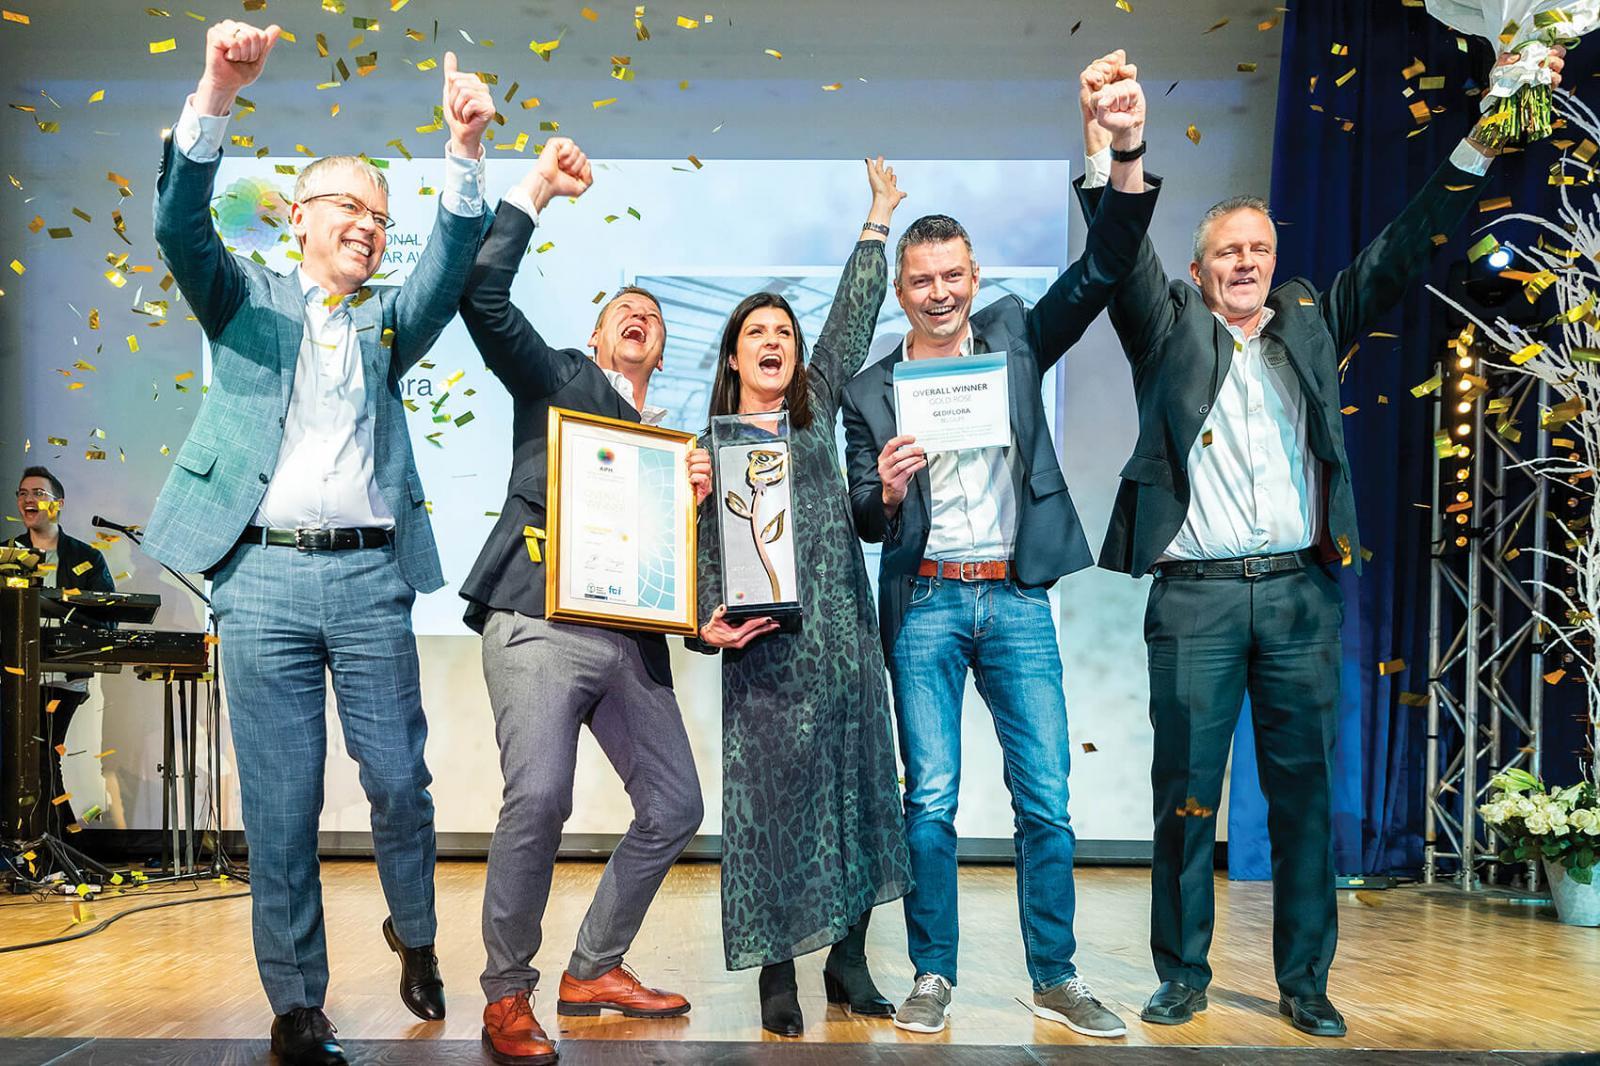 Gediflora wins International Grower of the Year